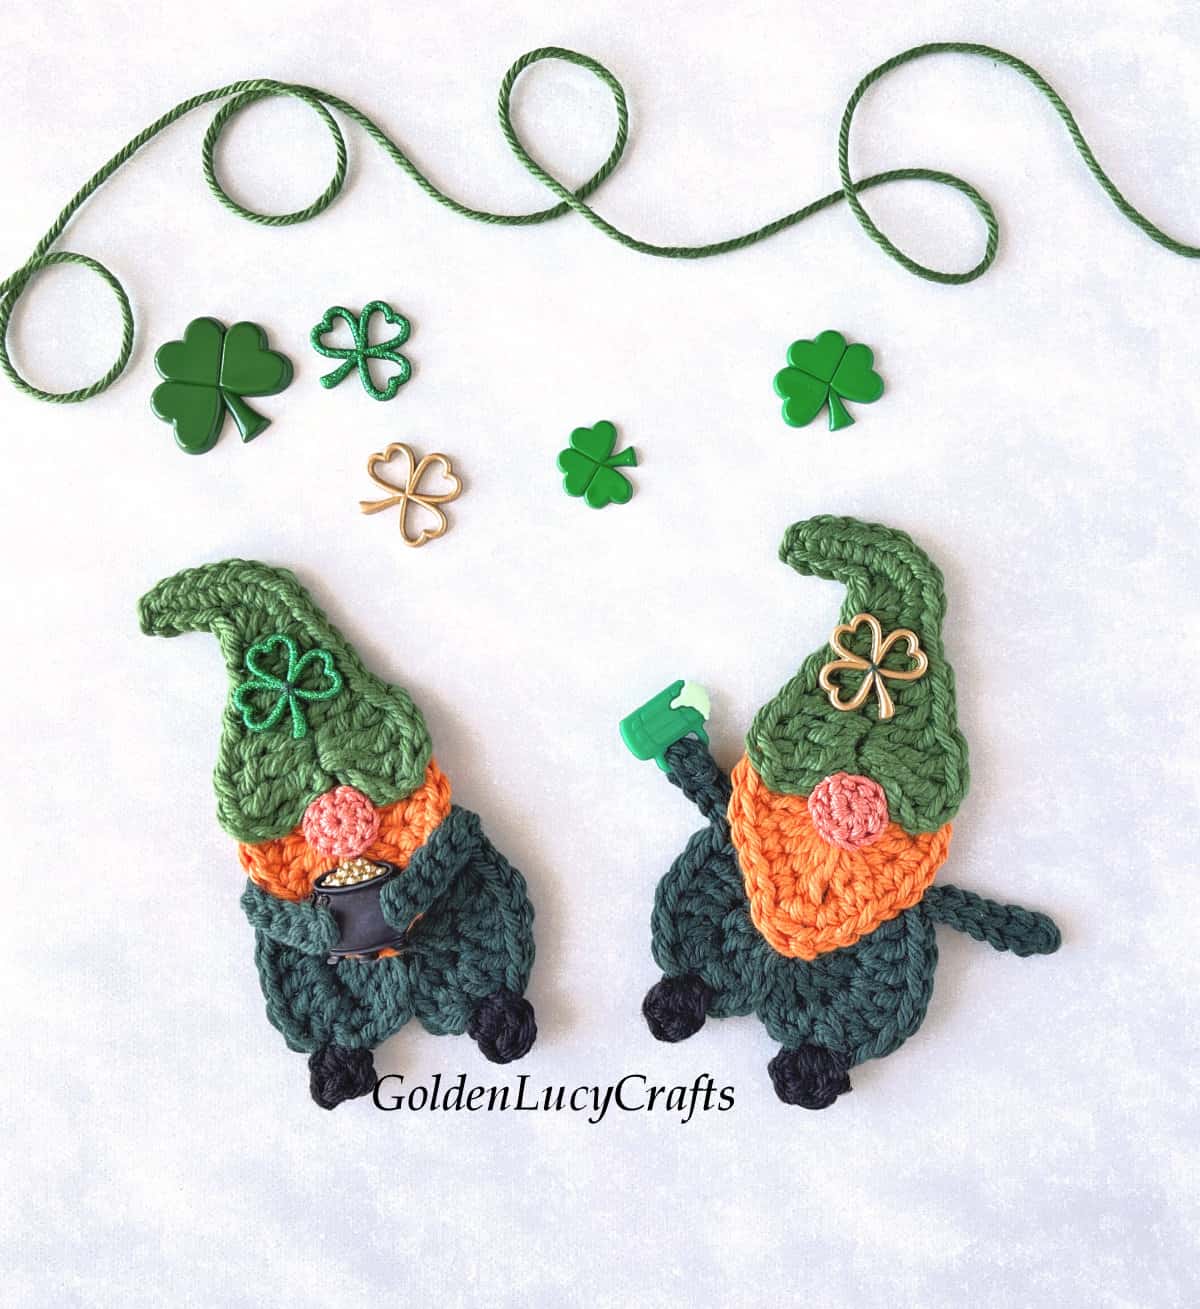 Two crochet leprechaun appliques.